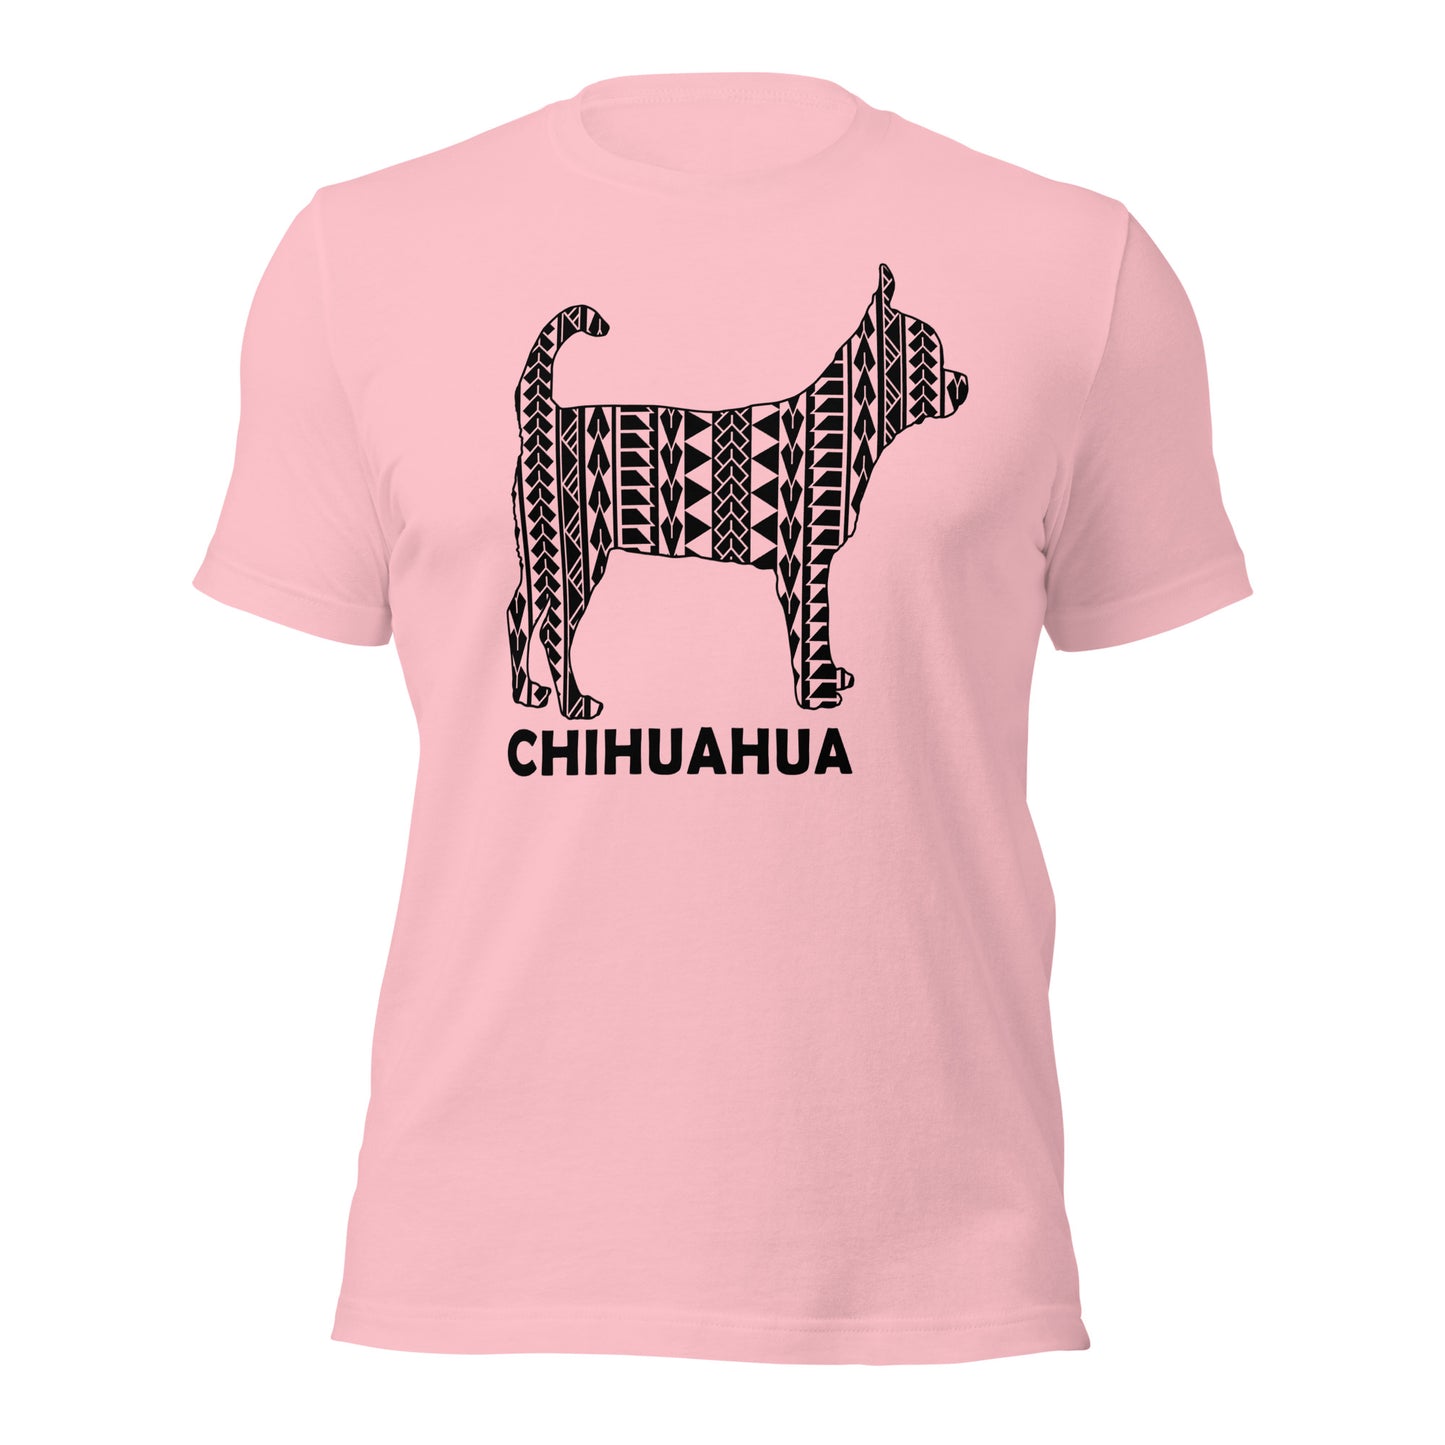 Chihuahua Polynesian t-shirt pink by Dog Artistry.